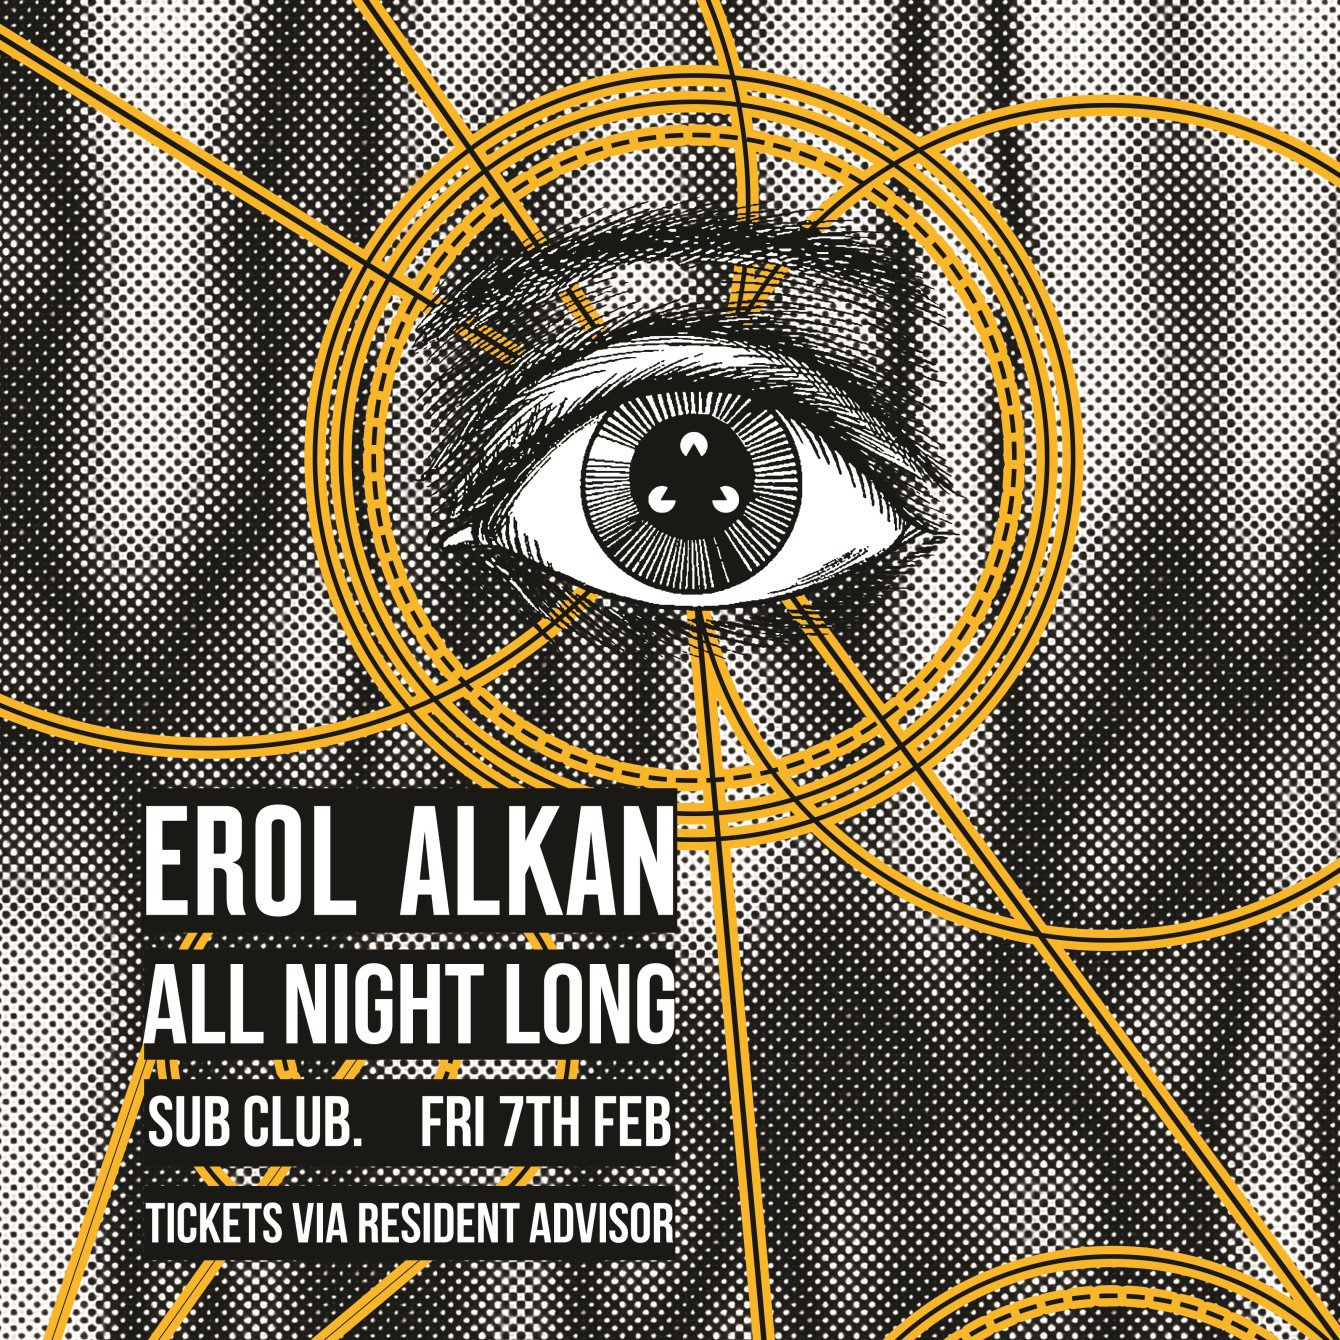 Erol Alkan - 4 Hour set - Flyer back